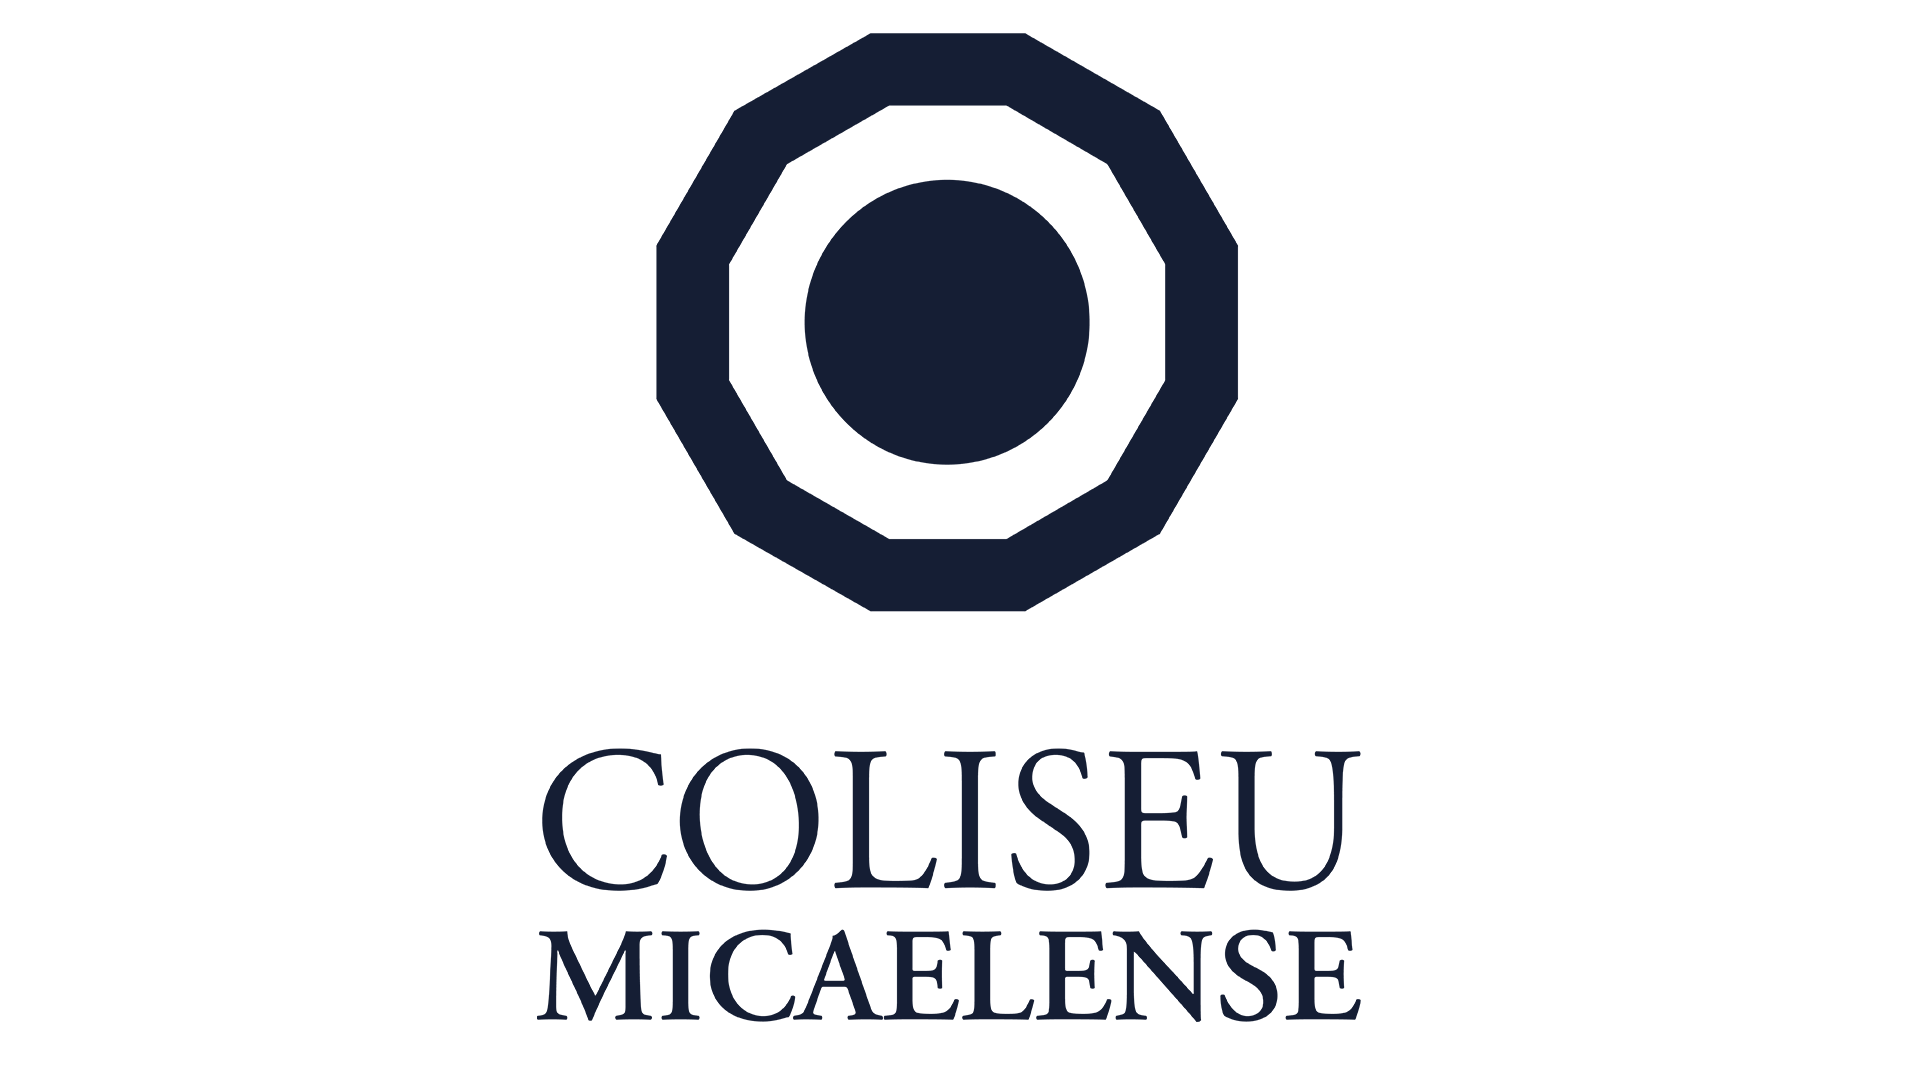 Coliseu Micaelense